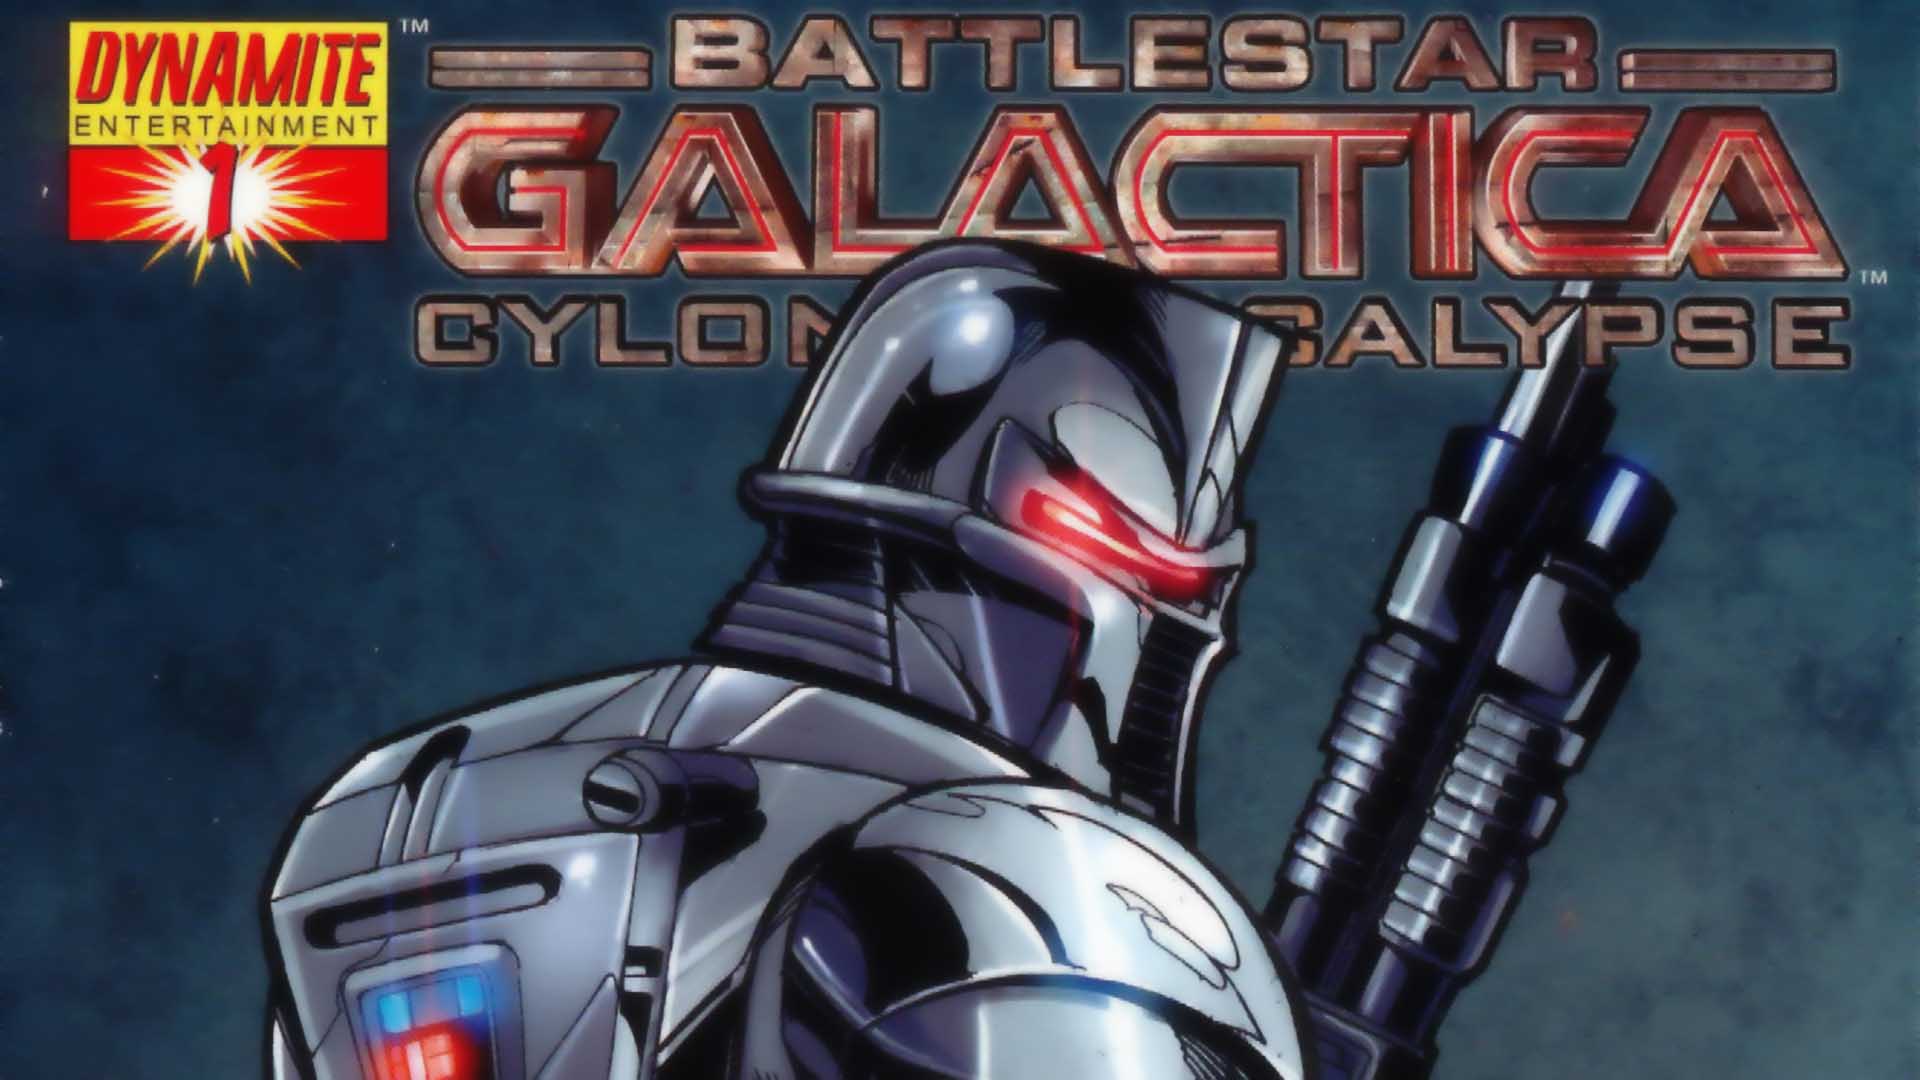 Laden Sie das Comics, Battlestar Galactica, Zylon (Battlestar Galactica)-Bild kostenlos auf Ihren PC-Desktop herunter